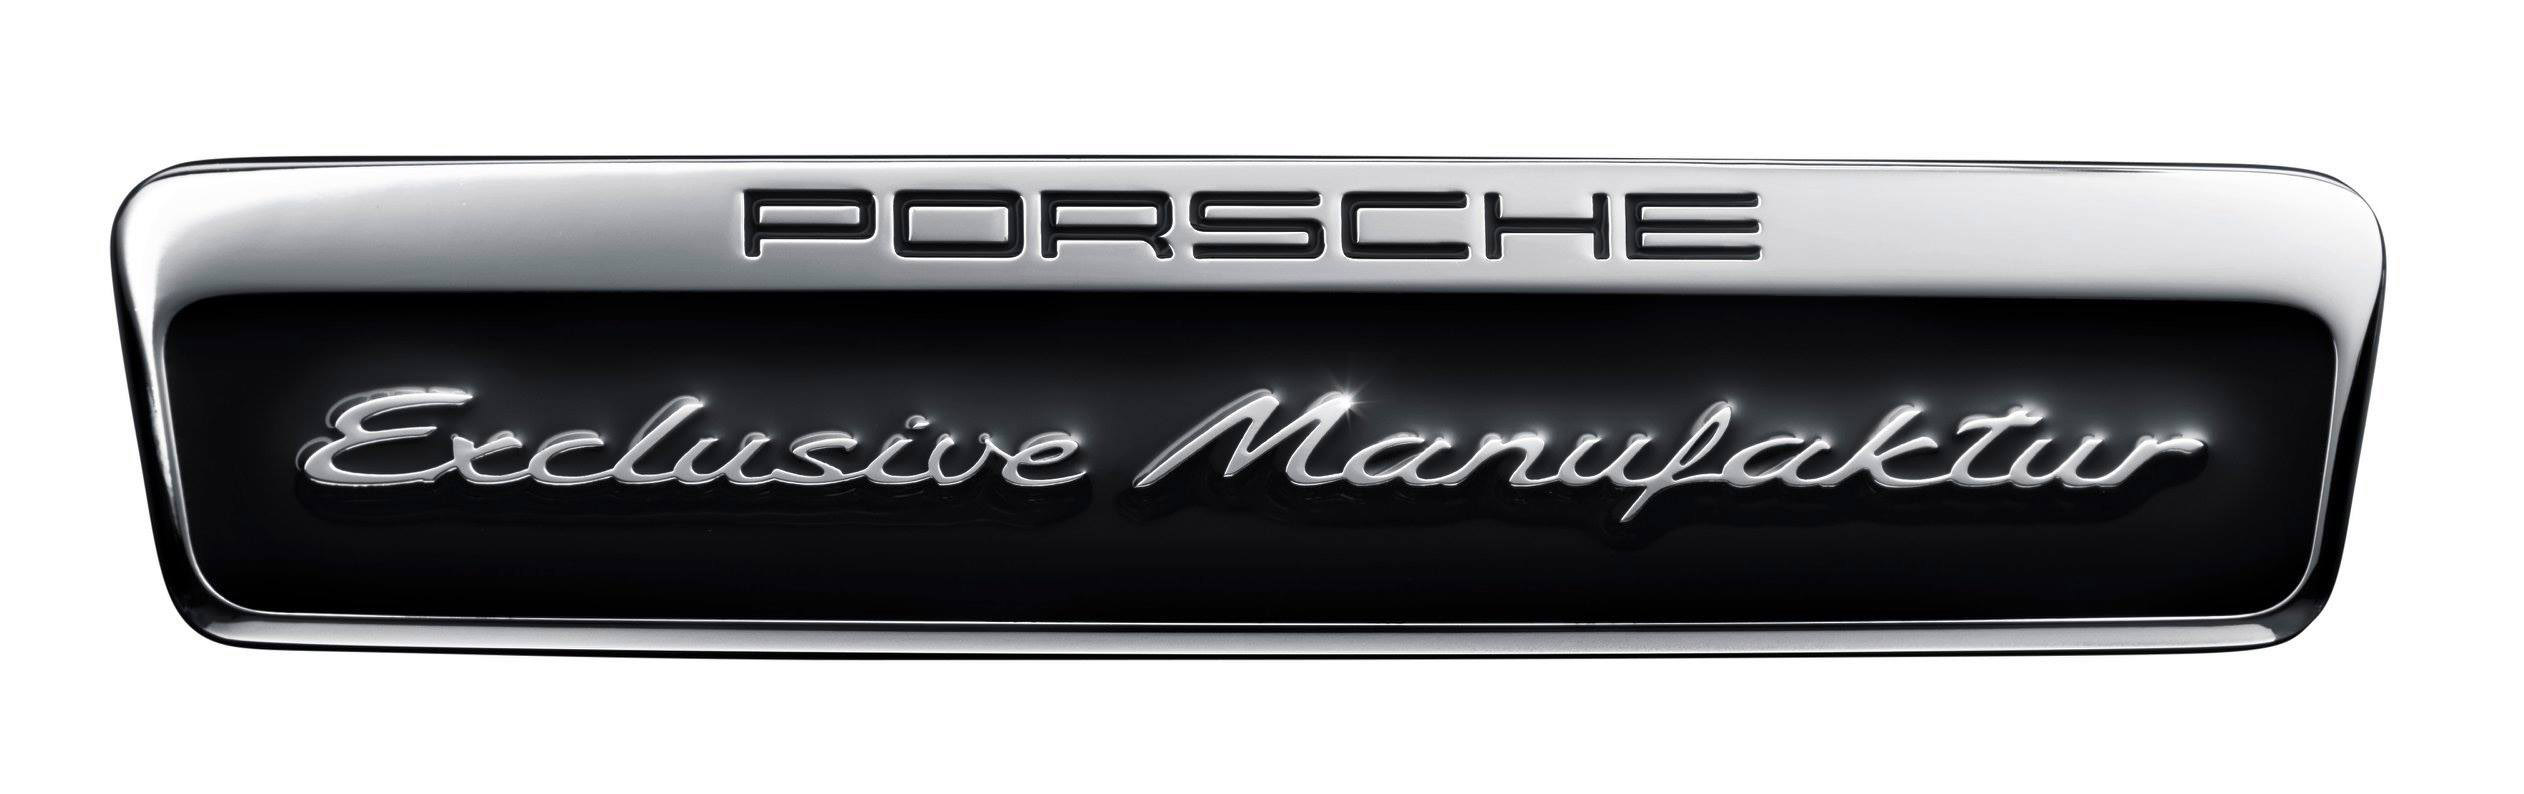 Porsche Panamera Turbo S Executive Exclusive Series